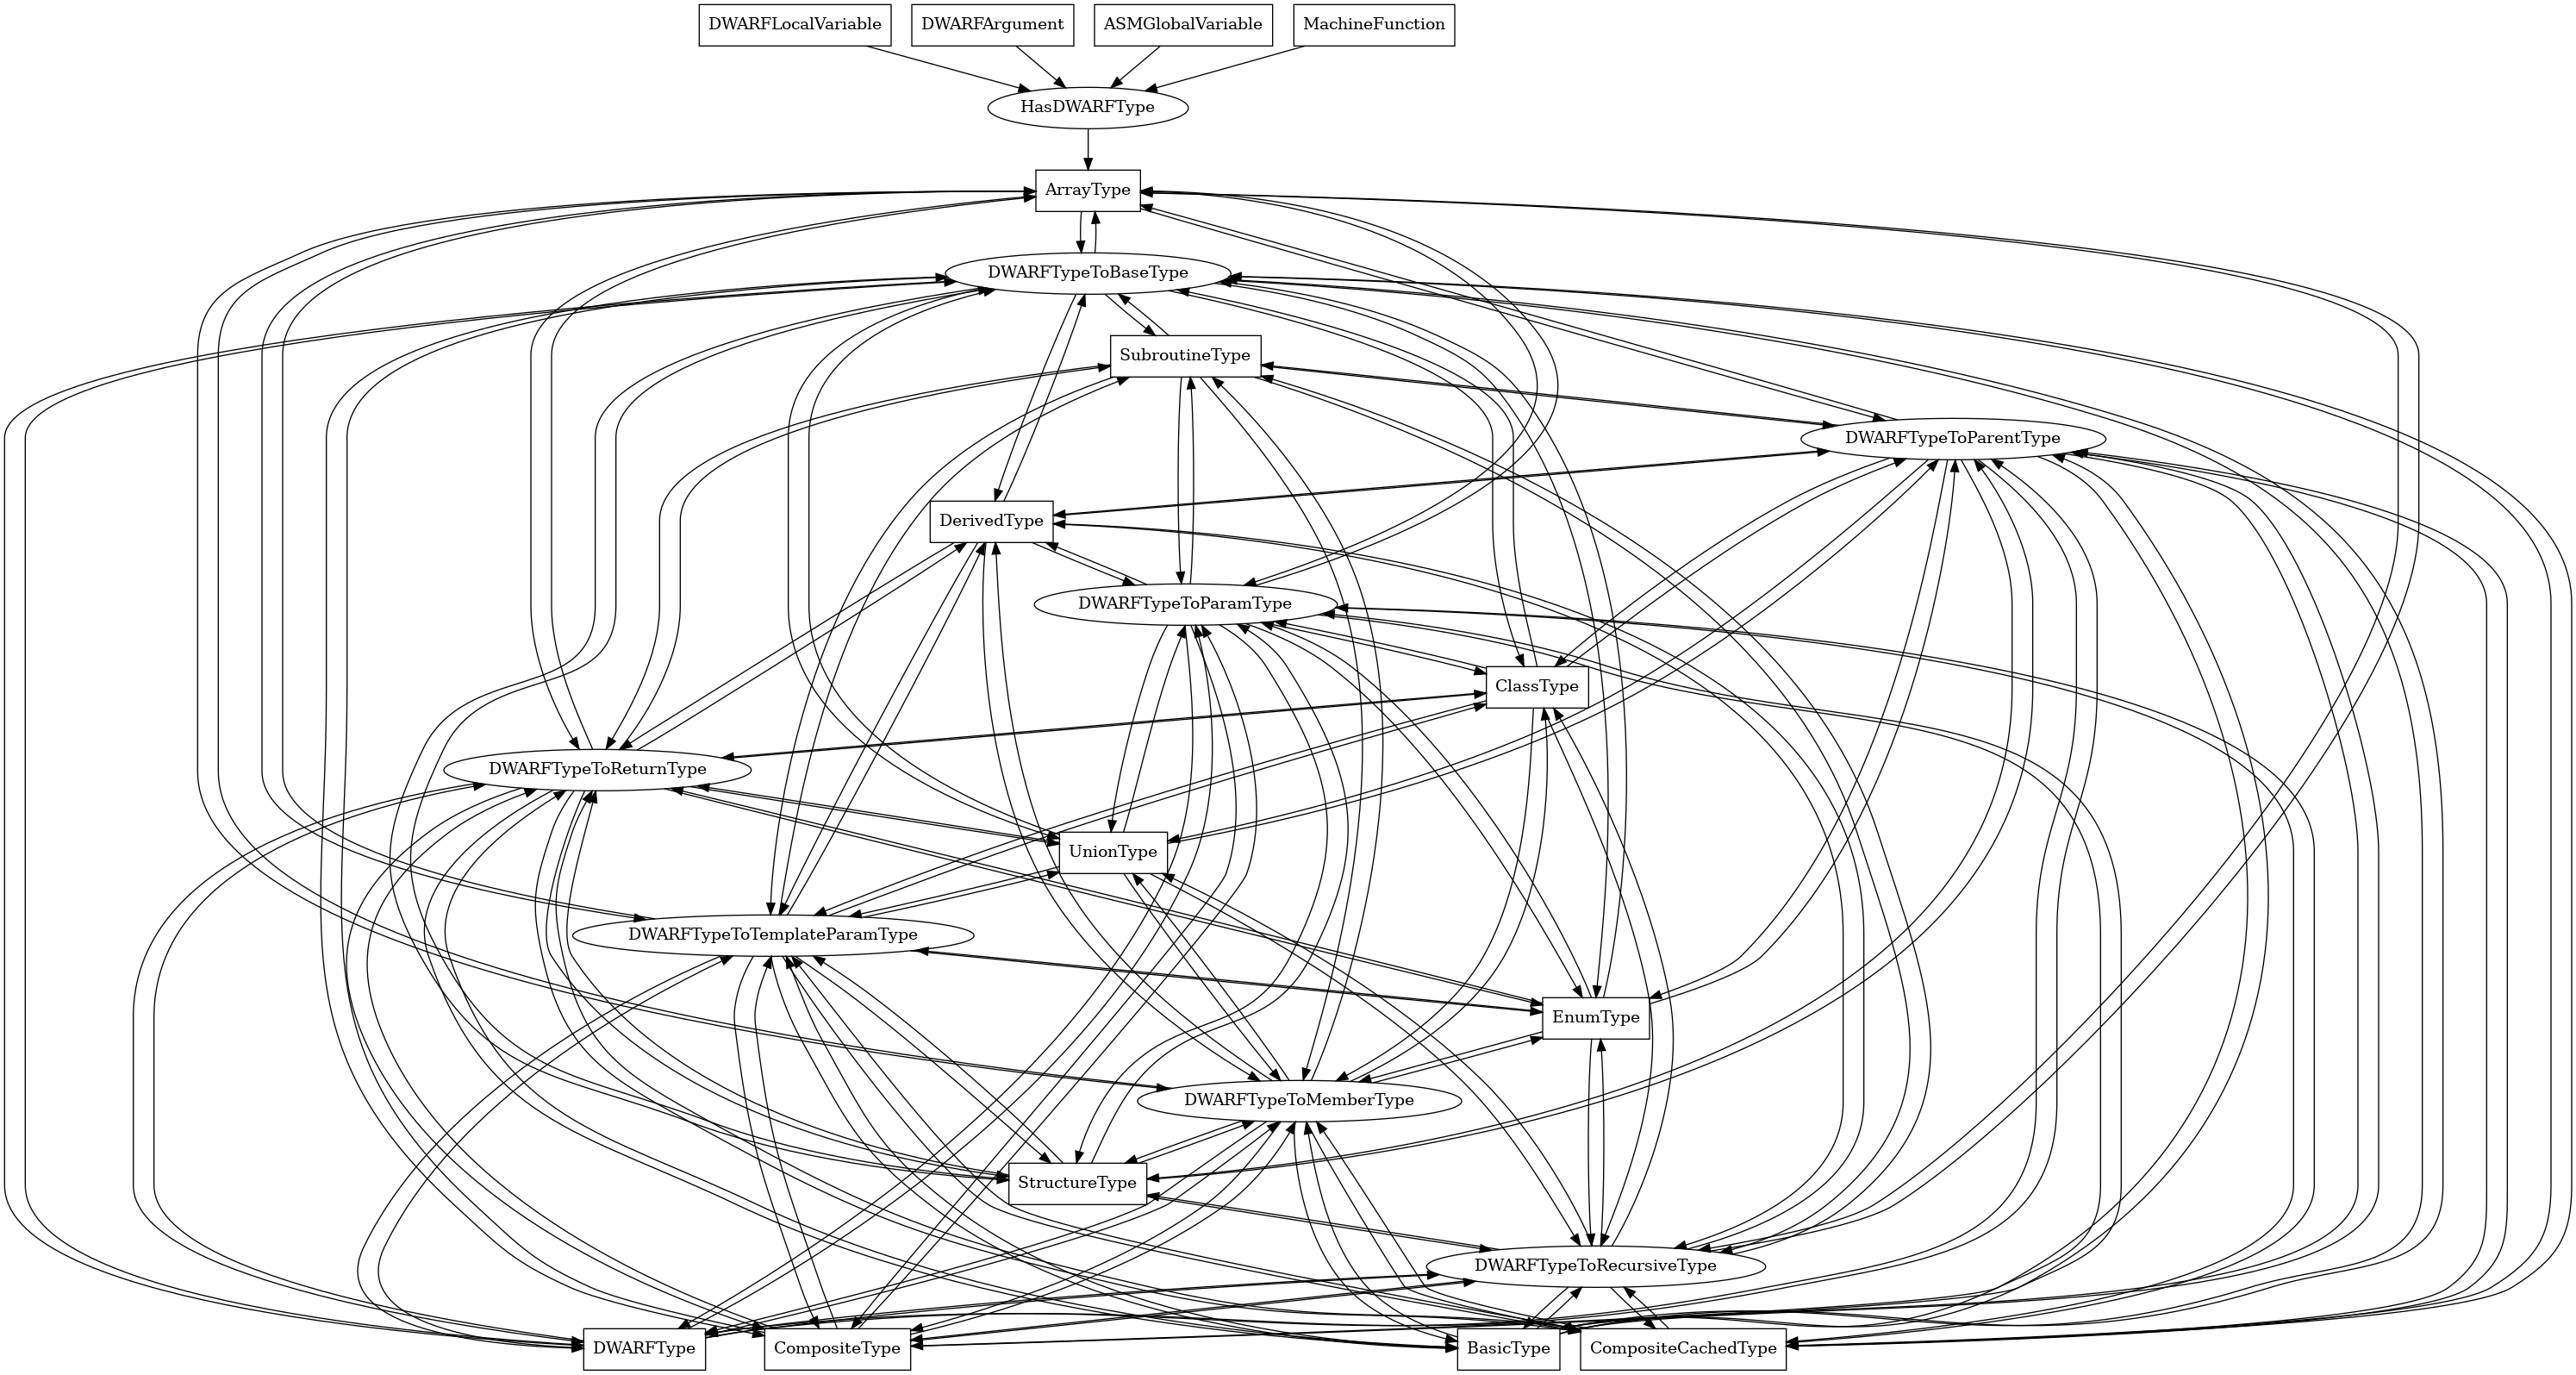 Entity-relationship diagram for ArrayType nodes